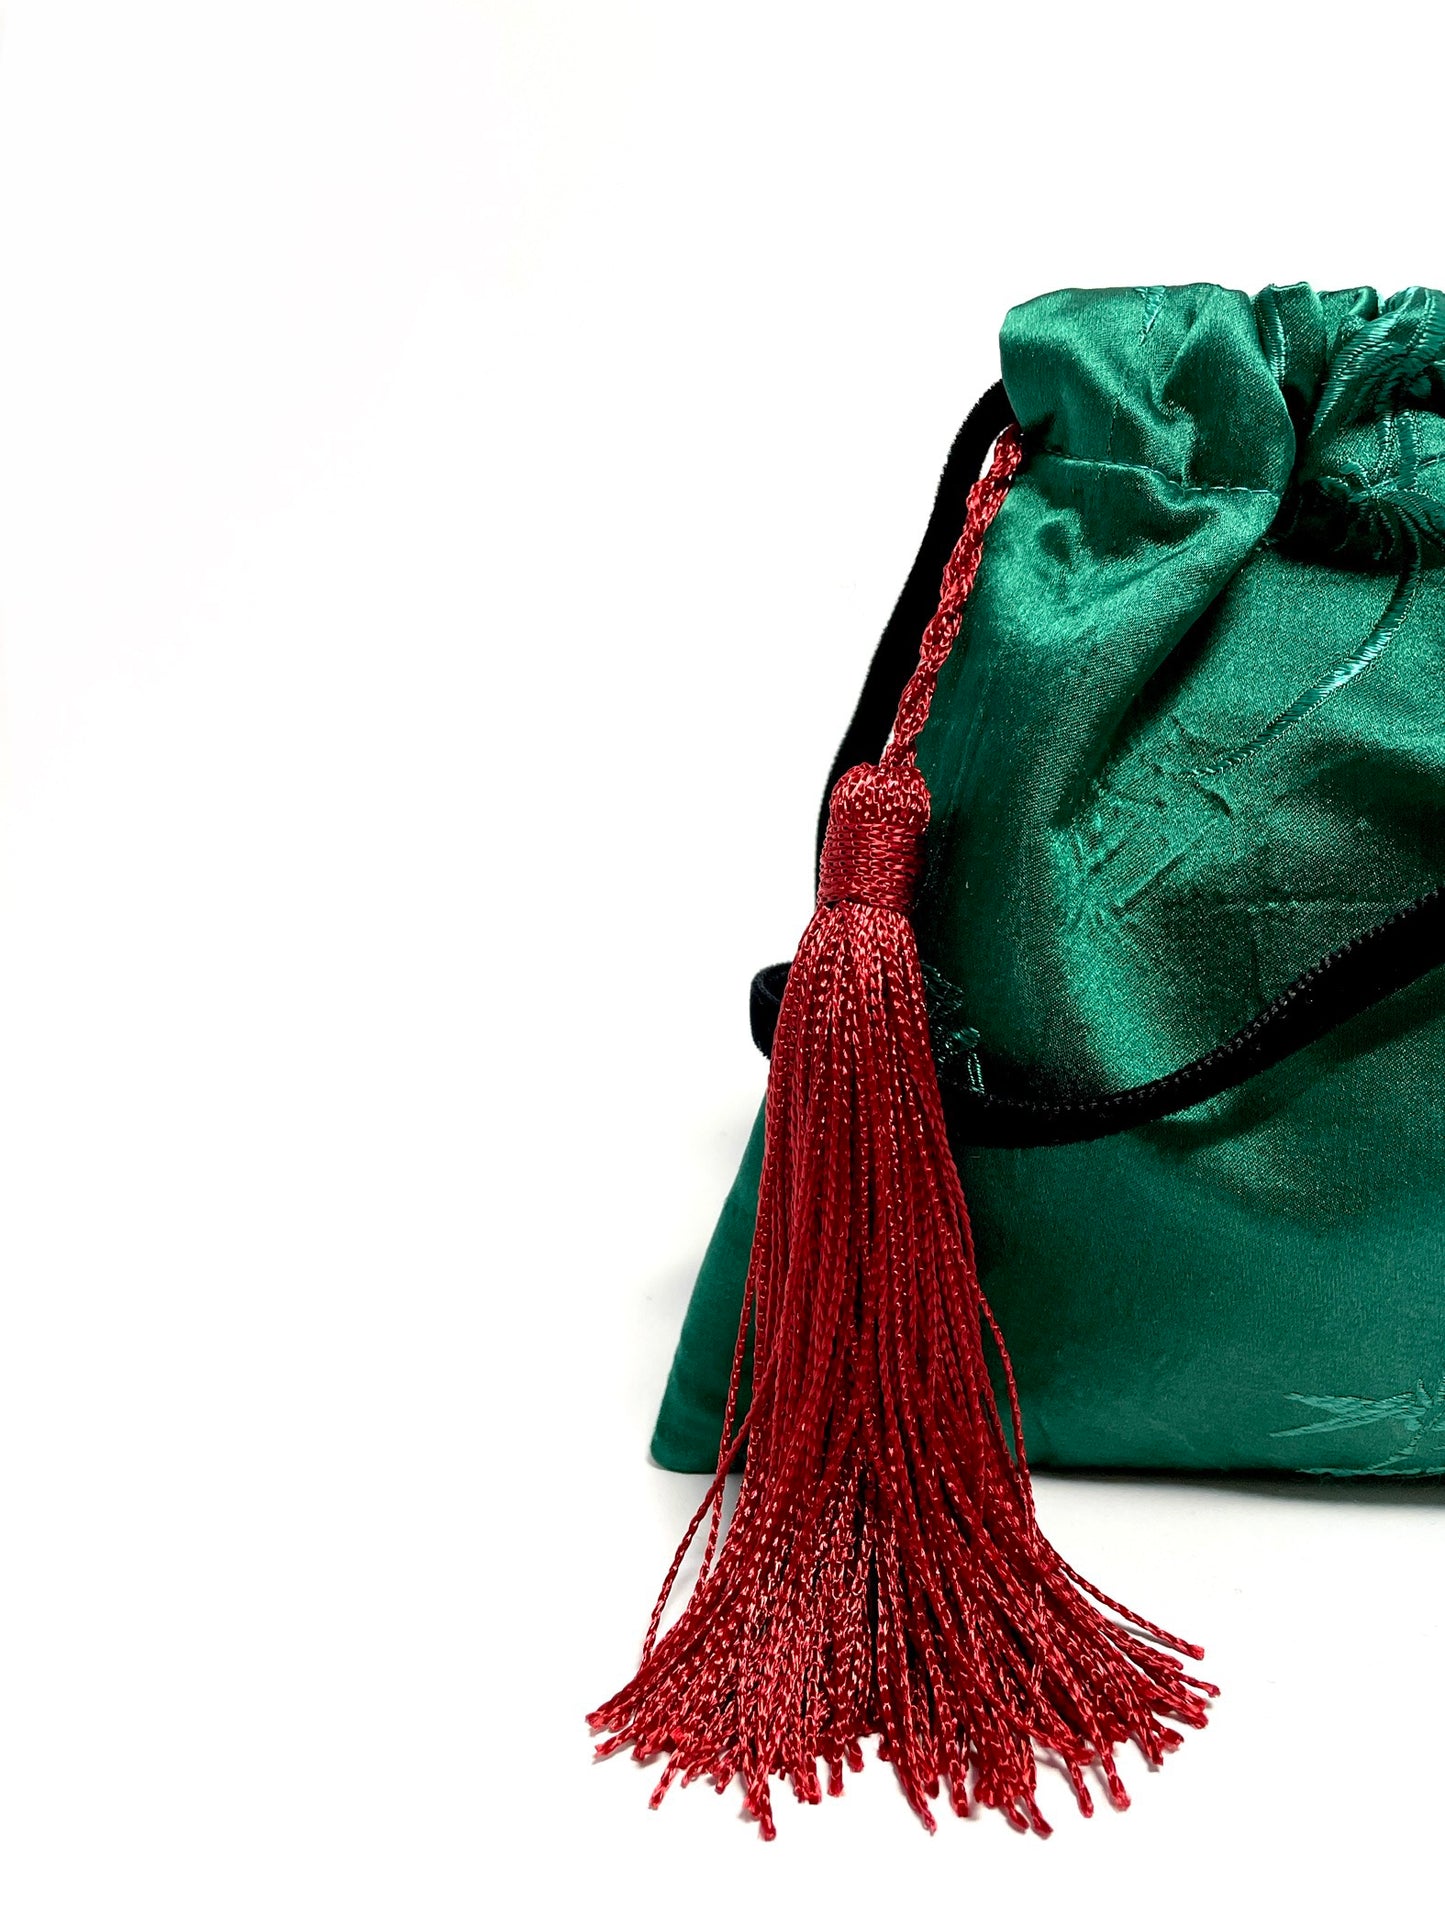 Green little handbag with red tassel